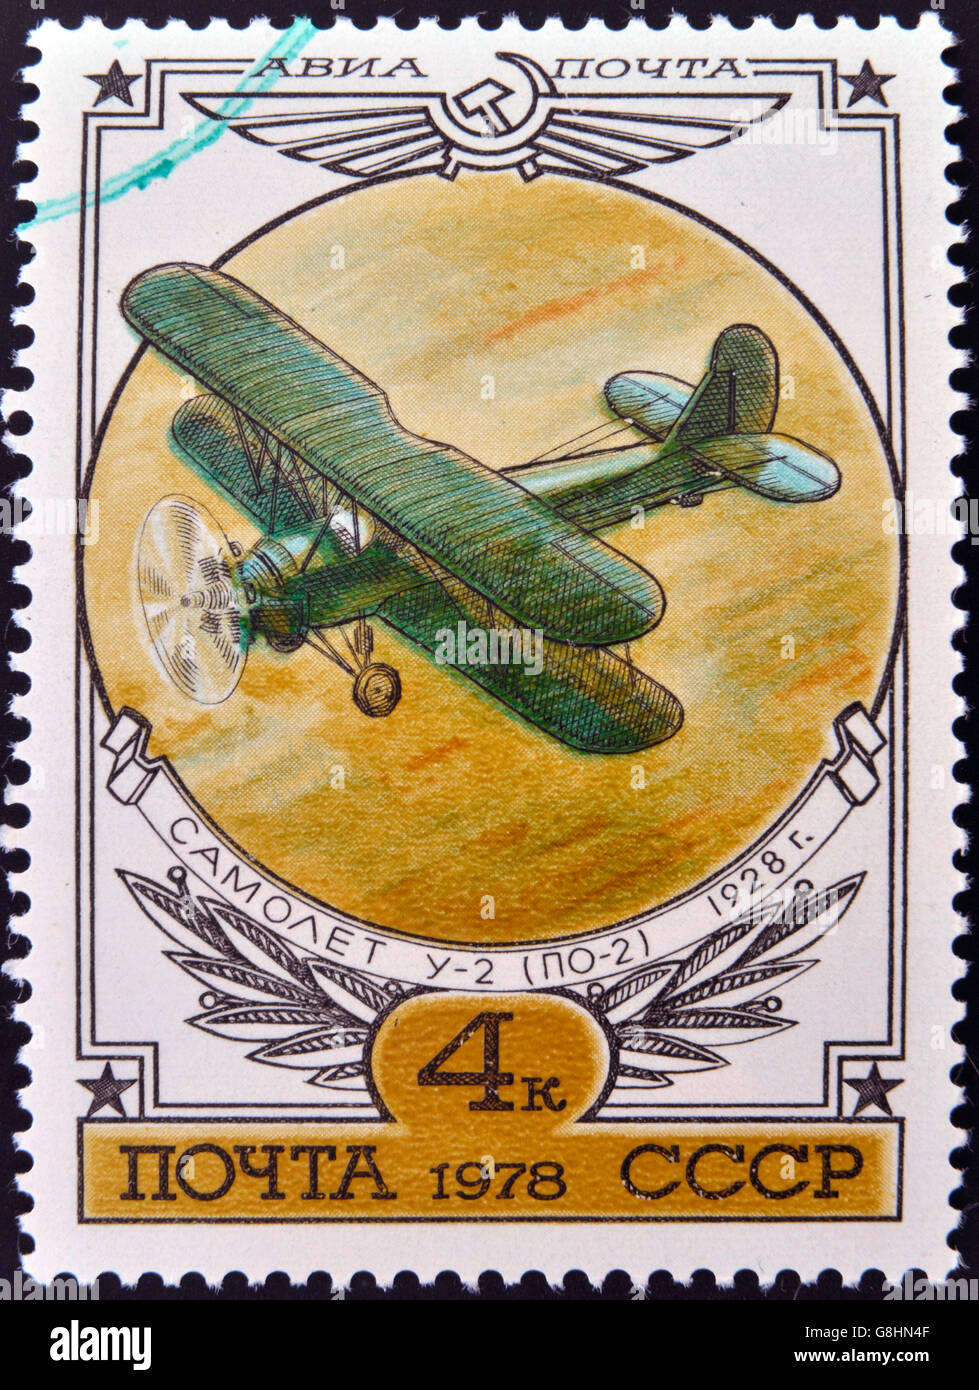 USSR - CIRCA 1978: A stamp printed in Russia shows the Airplane U-2 (PO-2), CIRCA 1978. Stock Photo